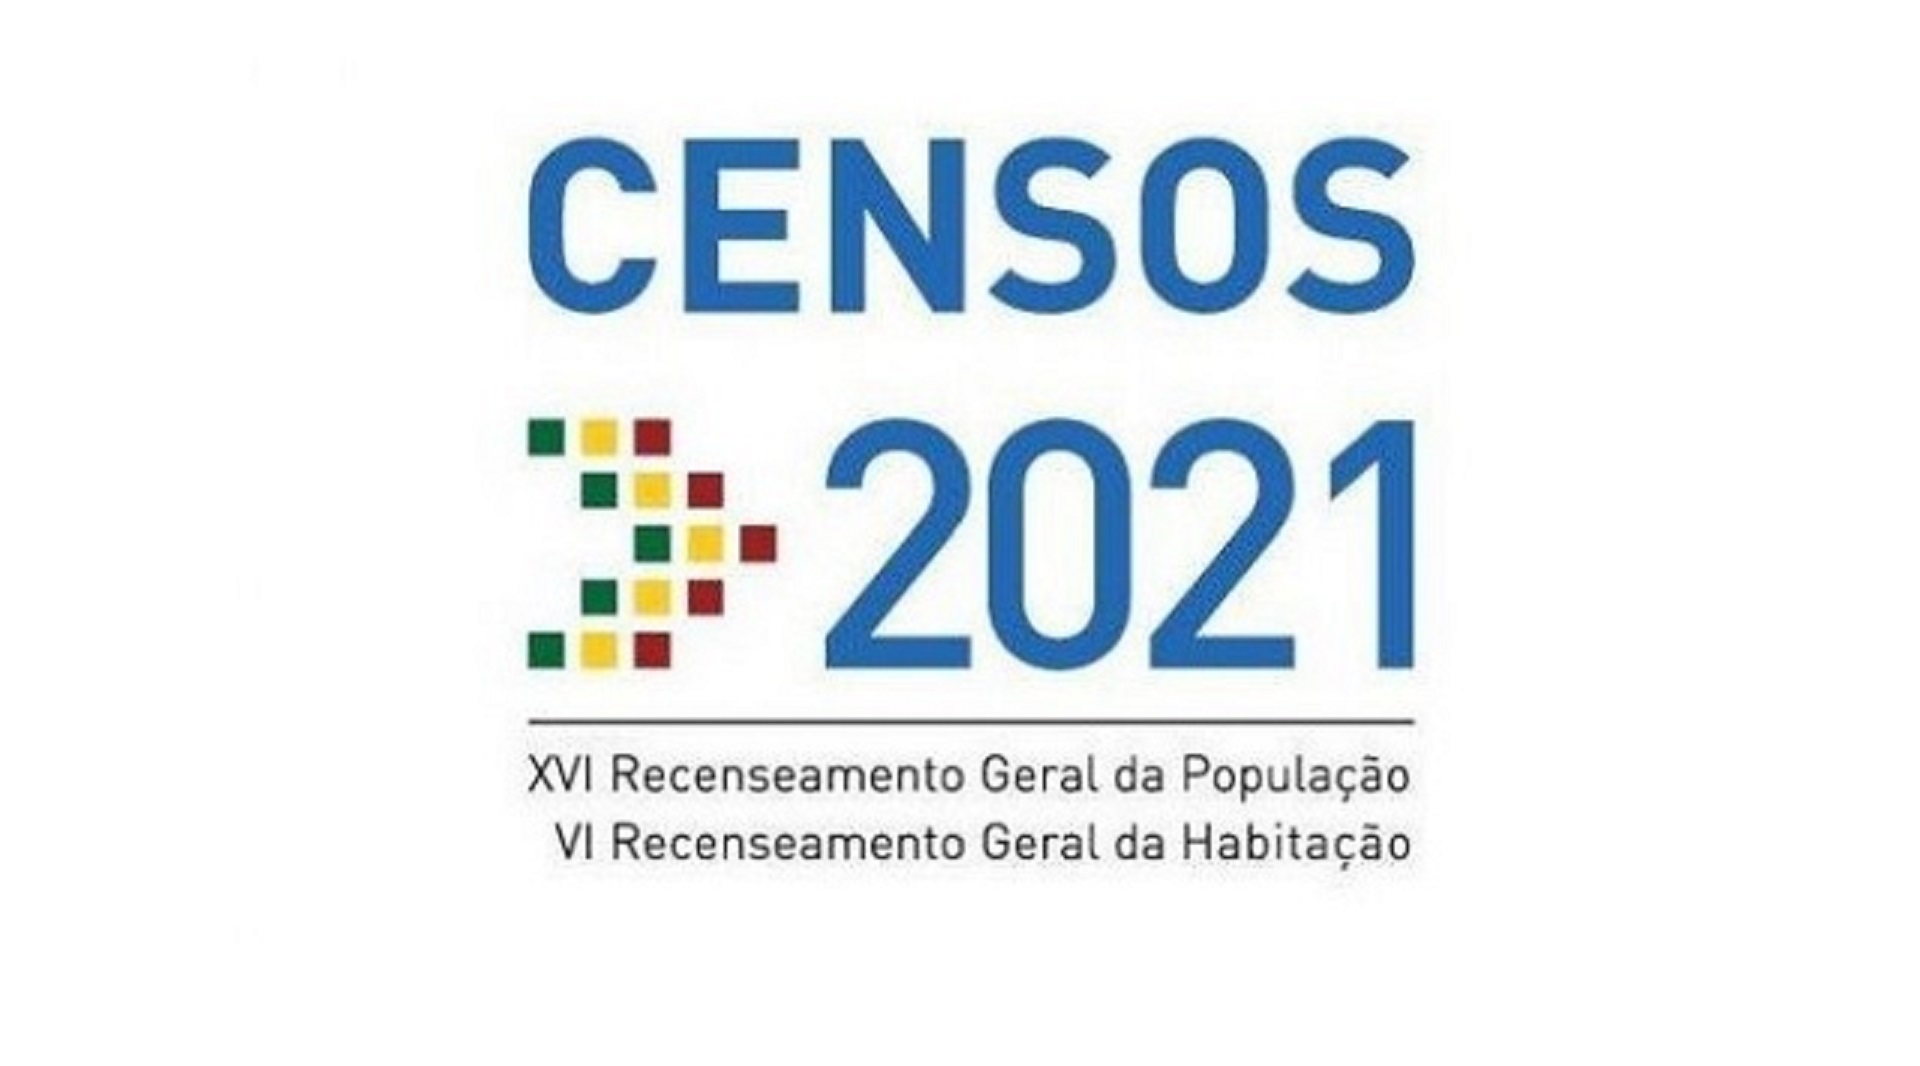 Censos2021